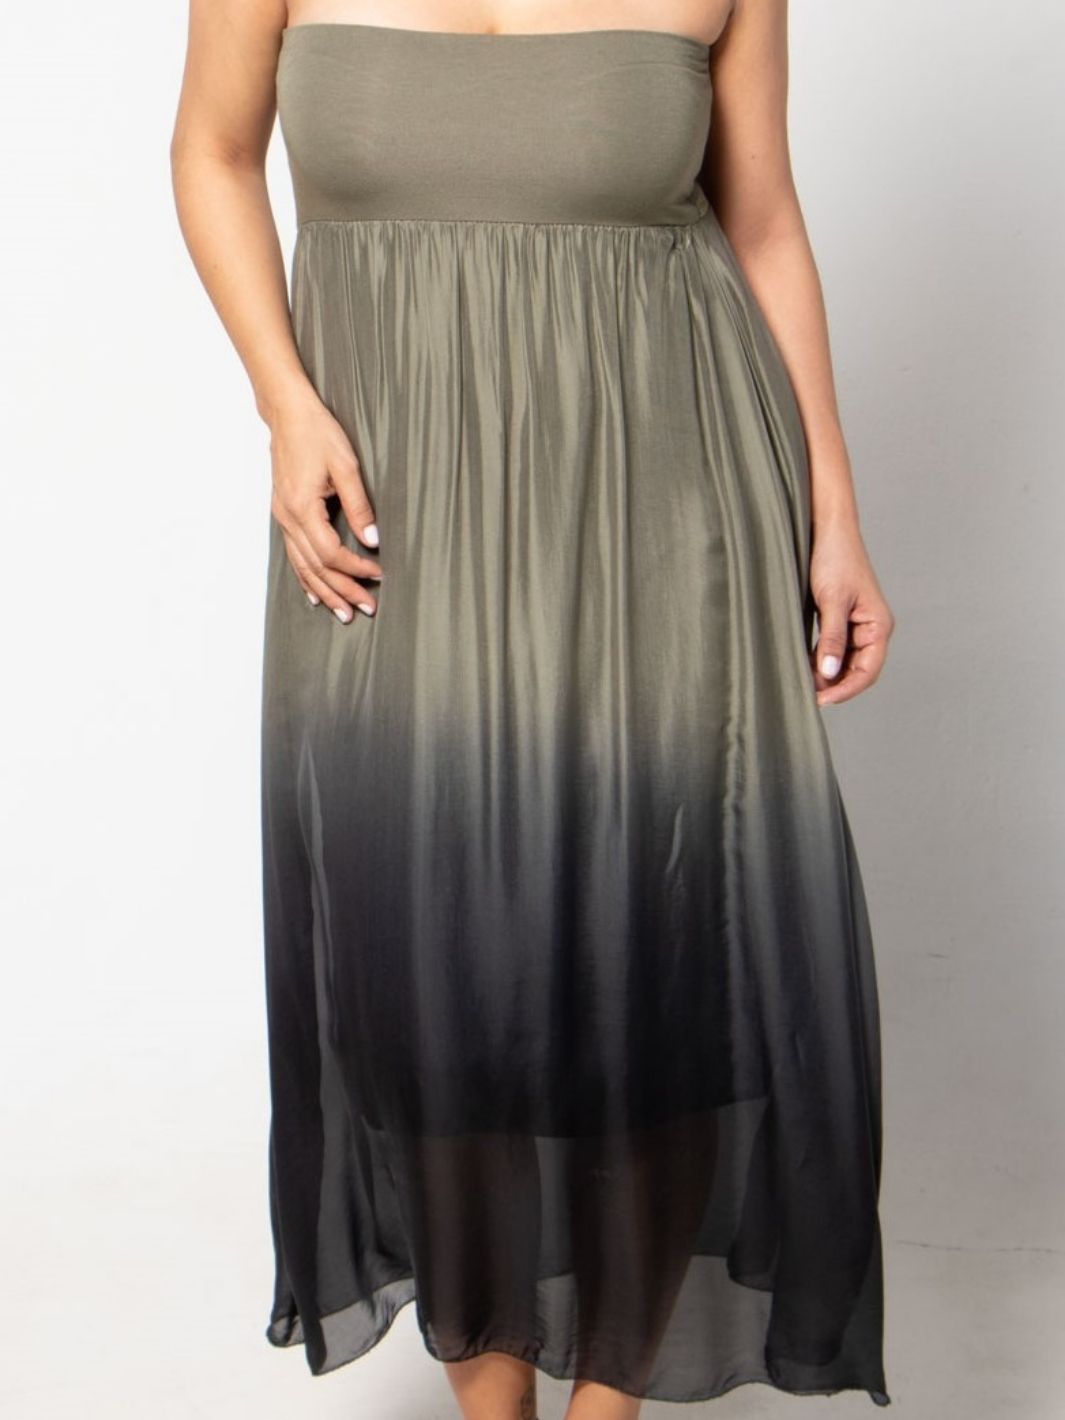 Ombre Skirt Dress Combo - Green